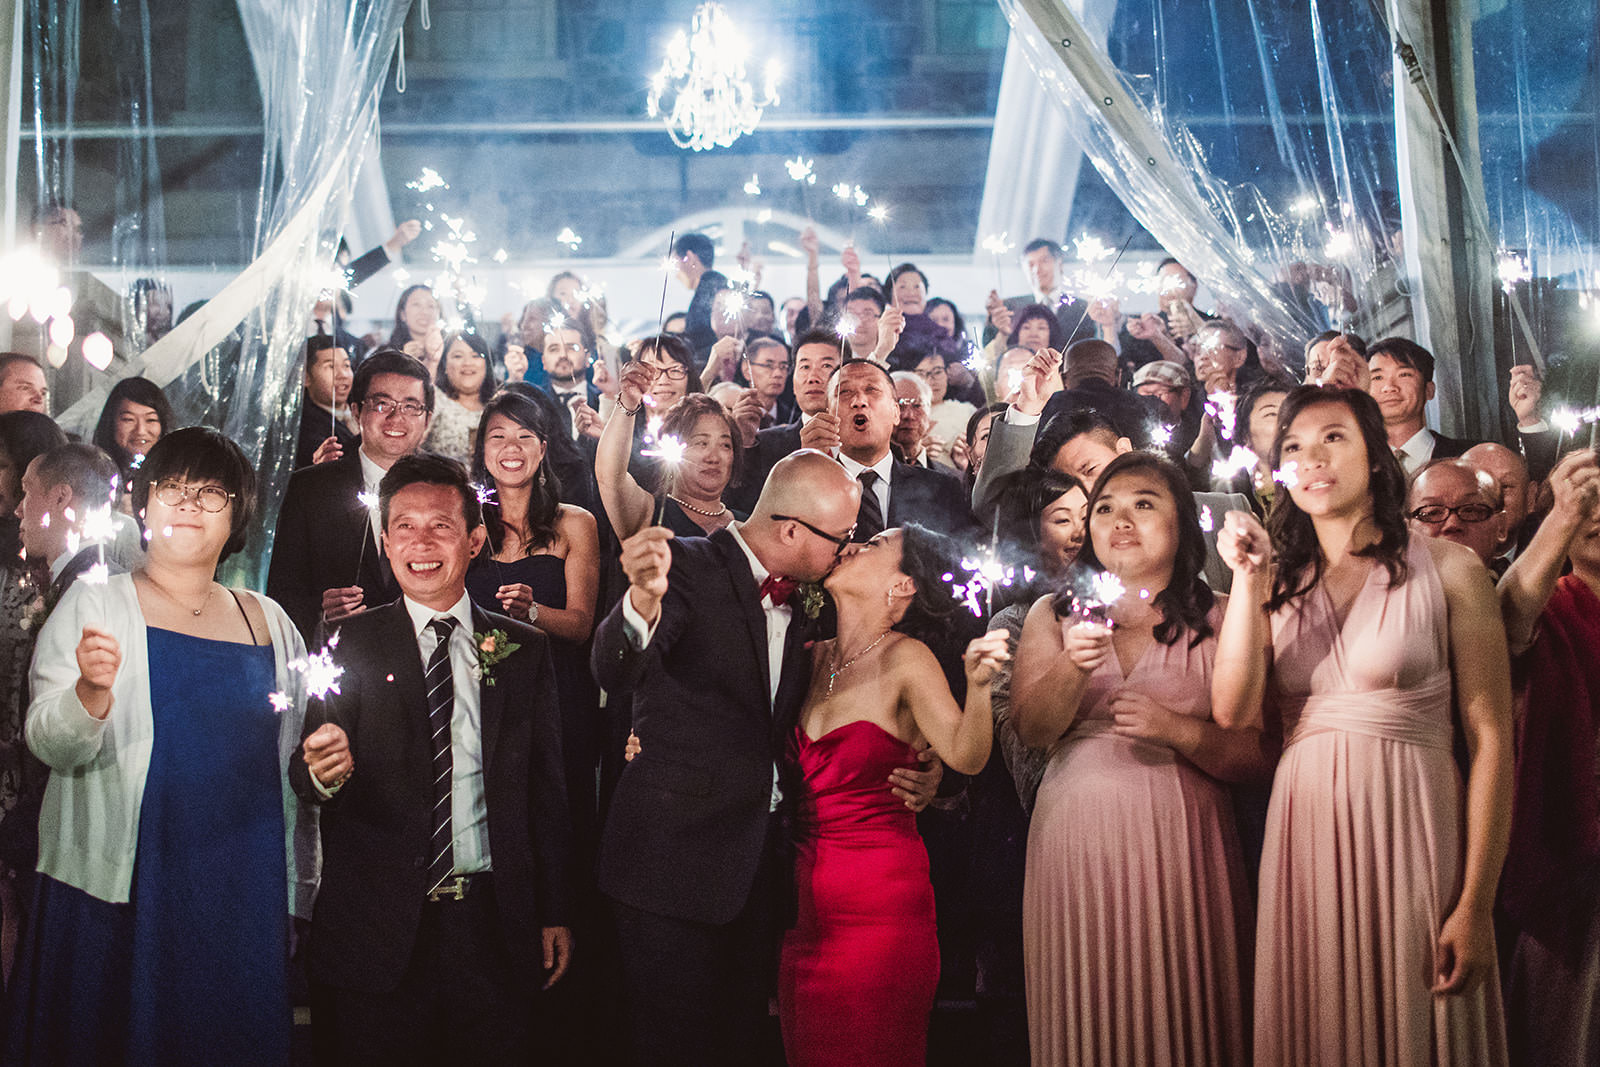 toronto wedding photography prices, toronto wedding photographer prices, How much does a wedding photographer cost Toronto, Wedding photography prices Ontario, Photographer rates Toronto